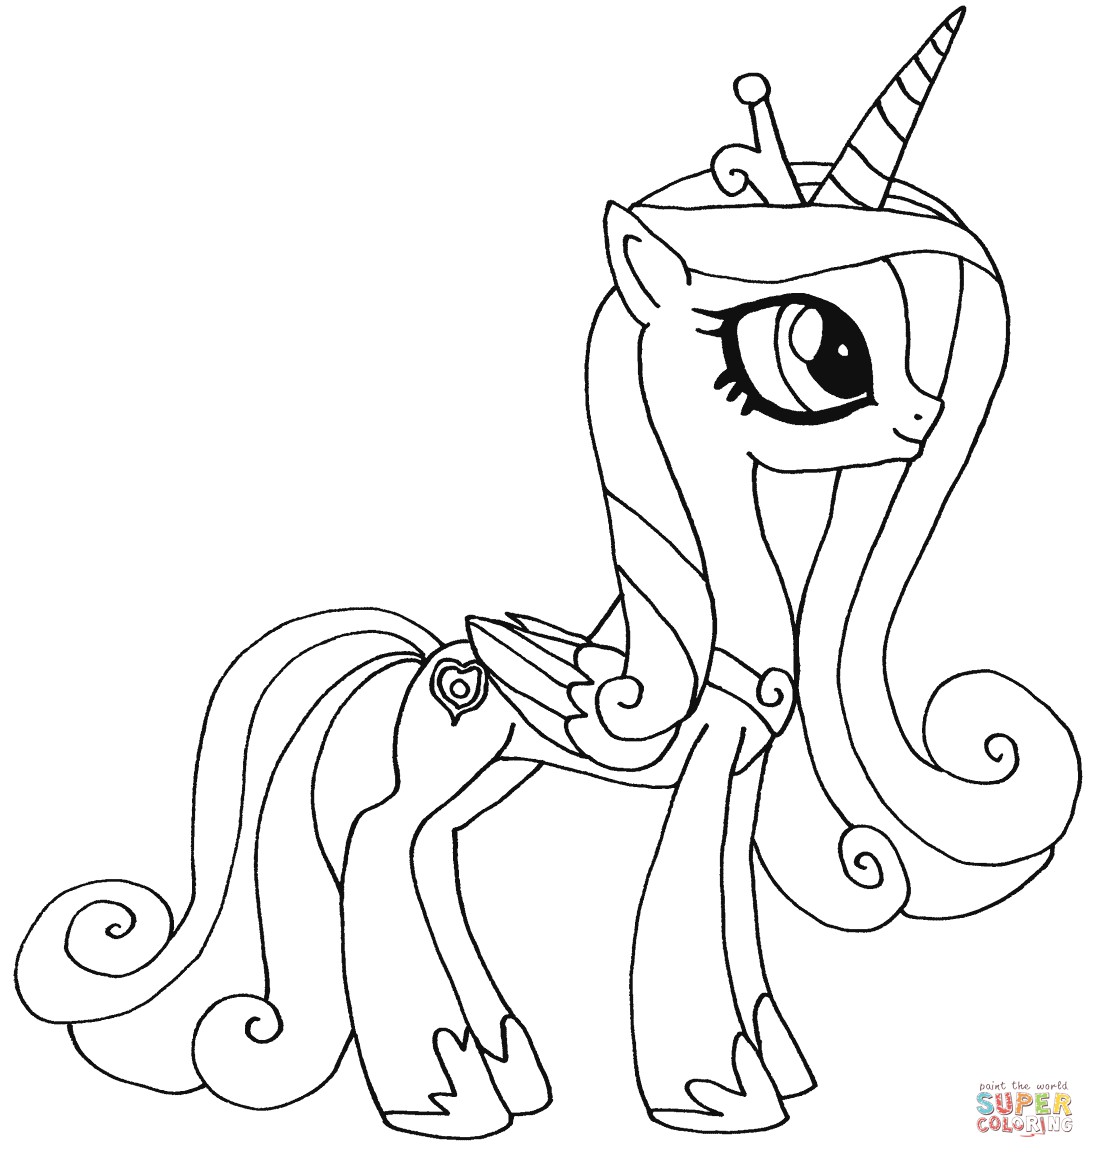 Princess Candance · Princess Applejack from My Little Pony